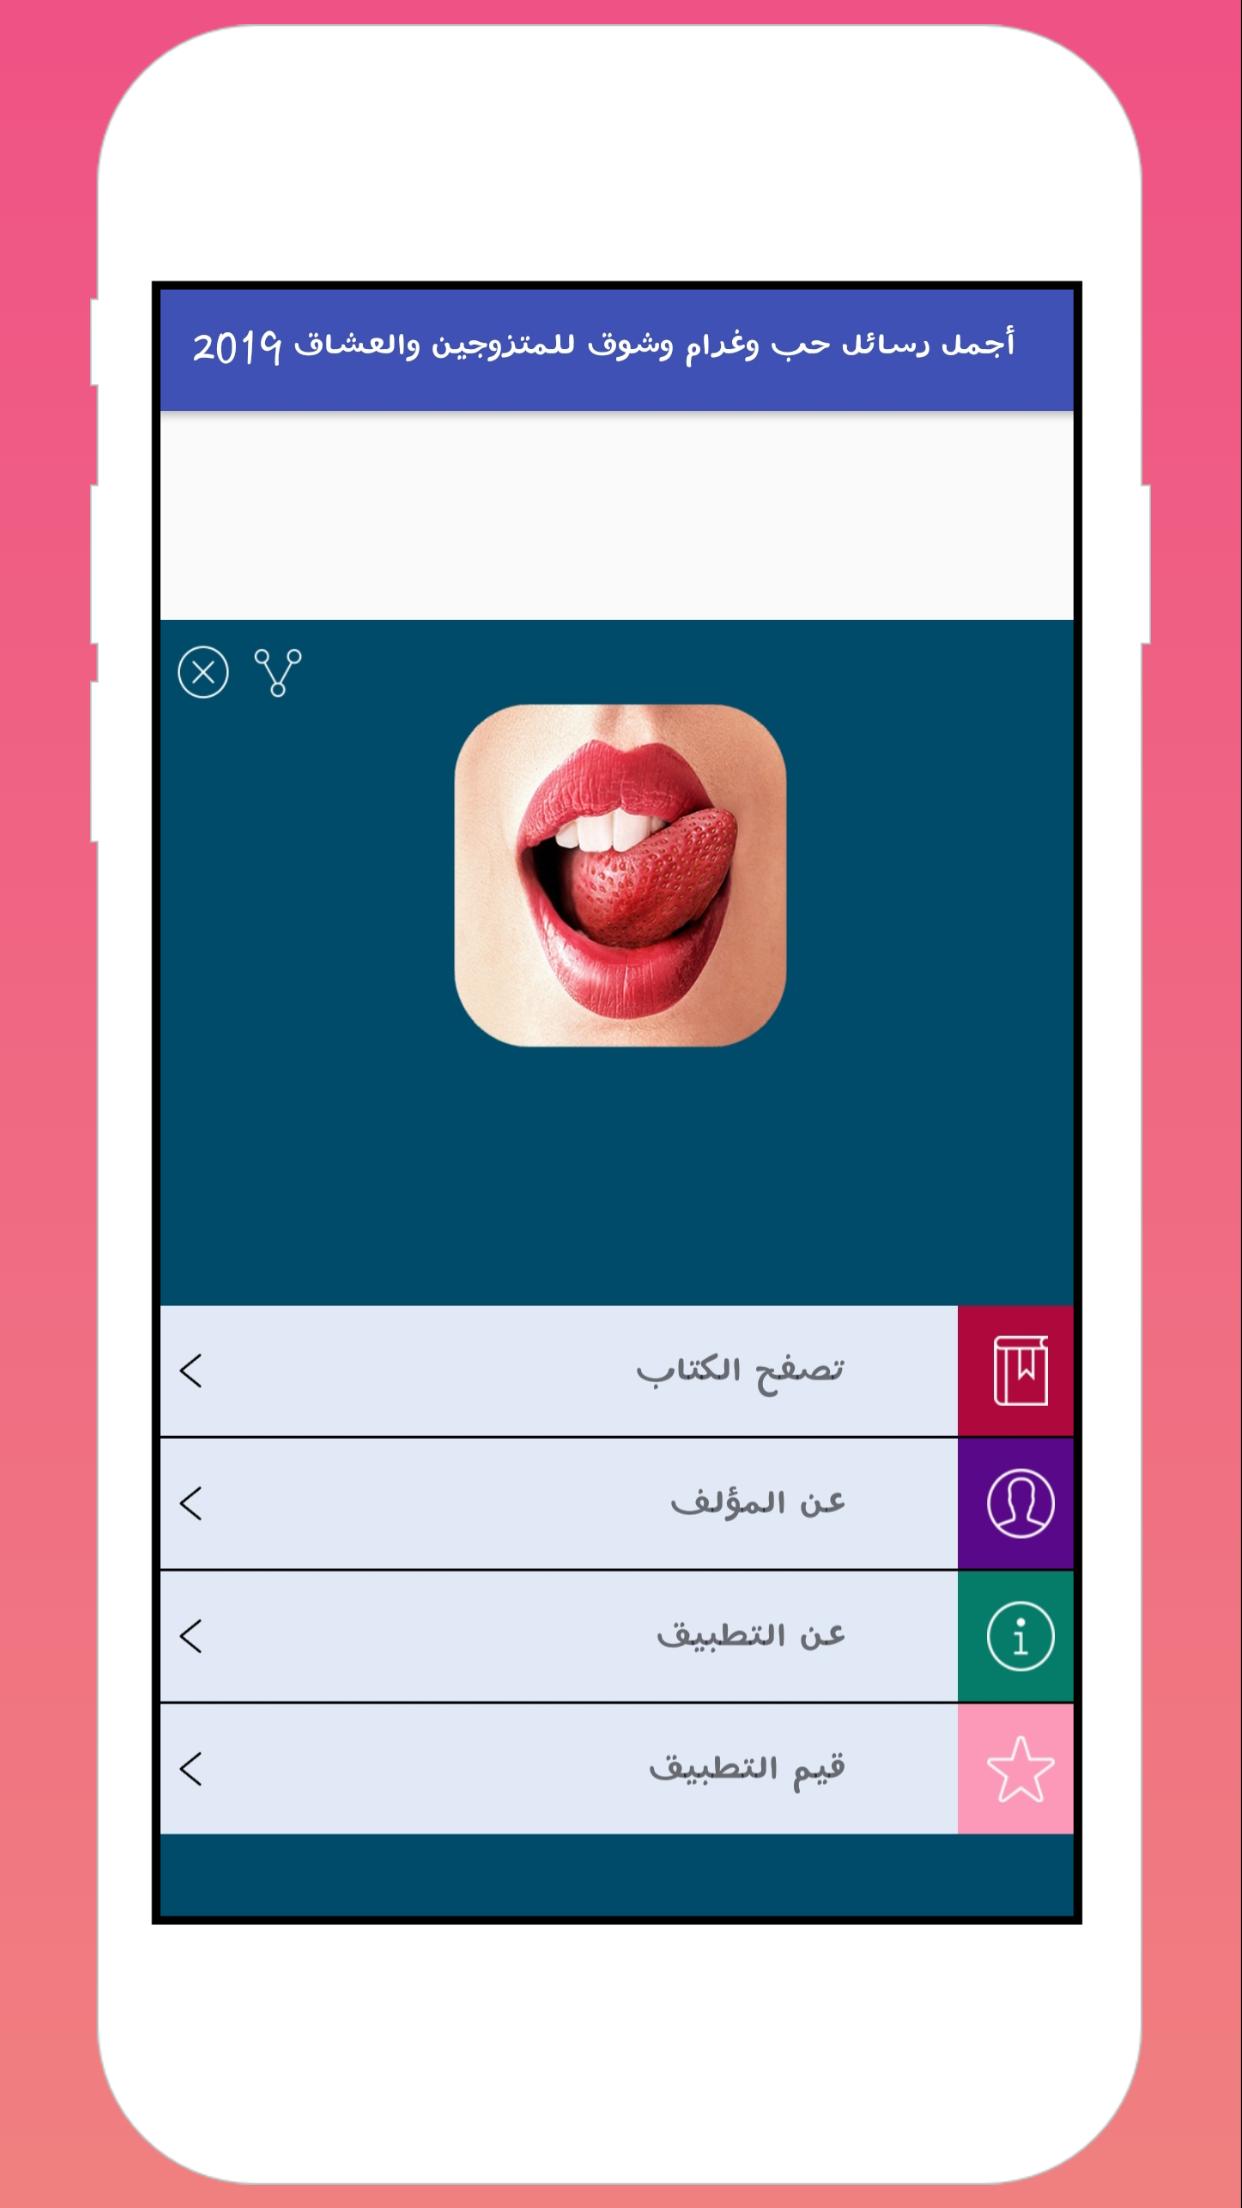 اجمل رسائل حب وغرام وشوق وحنين للمتزوجين والعشاق For Android